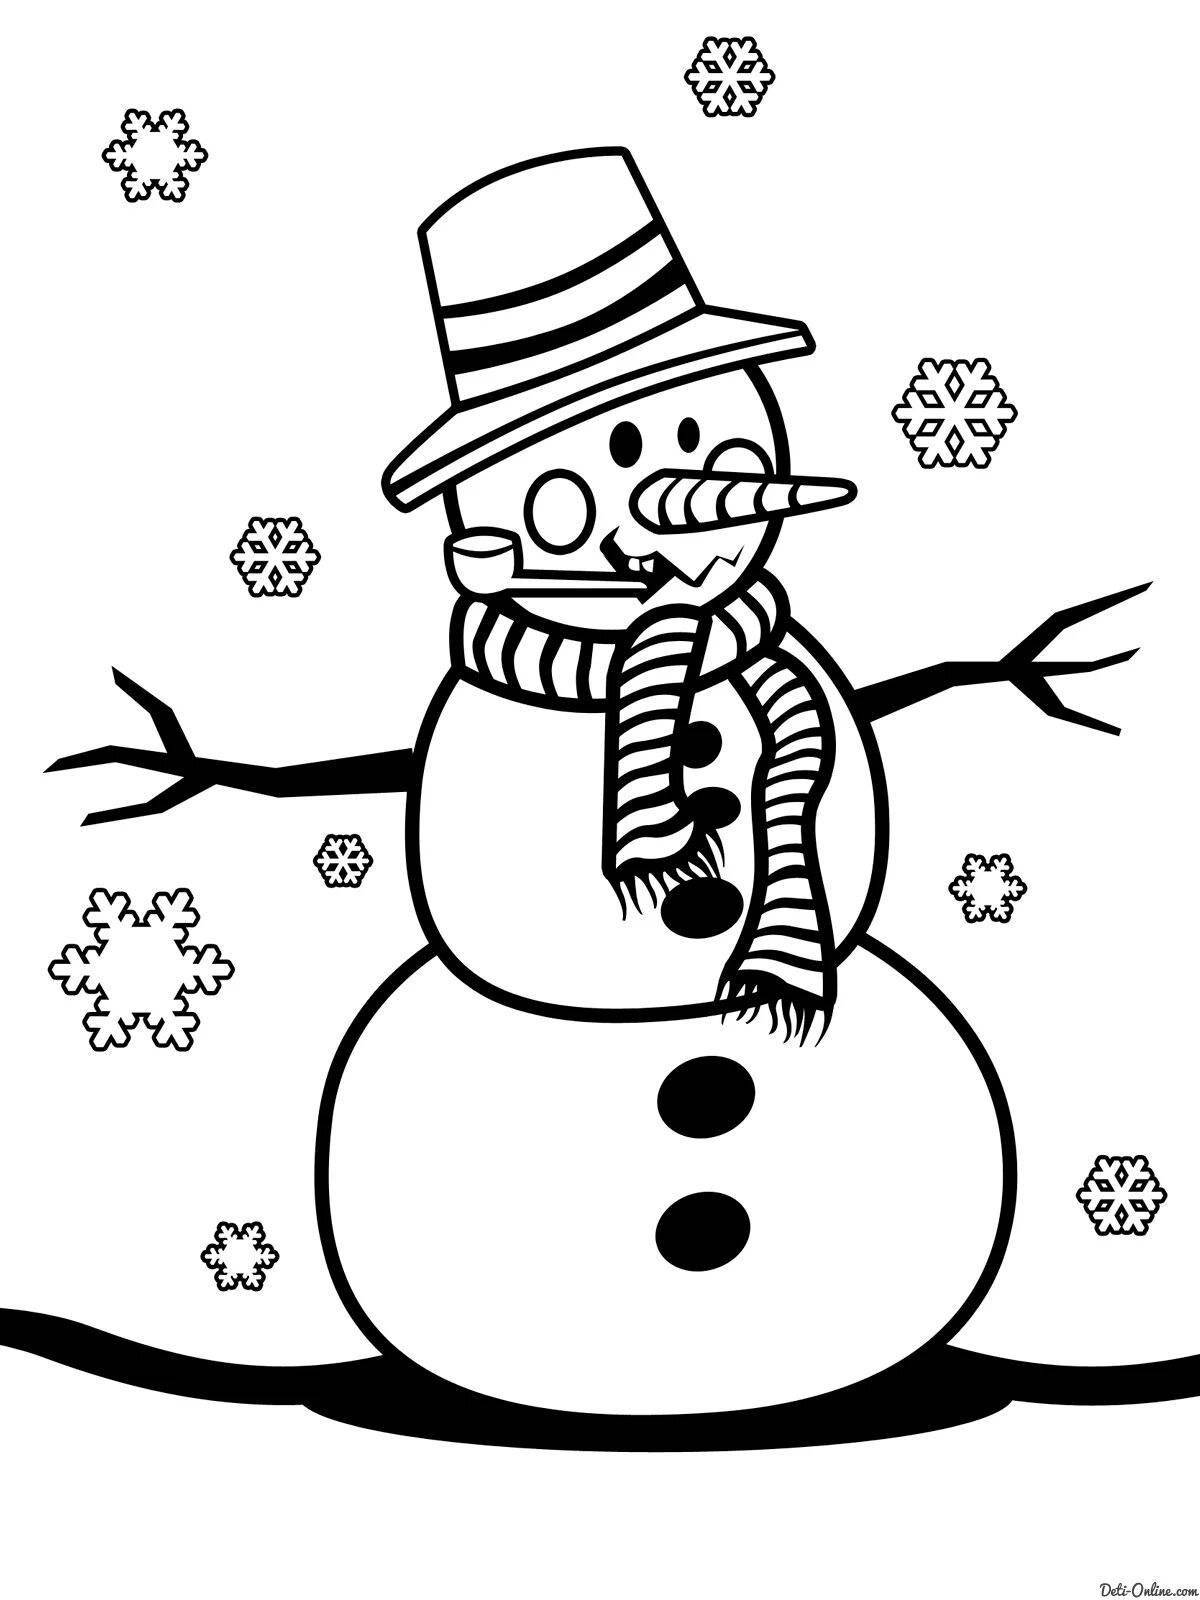 Snowman #7